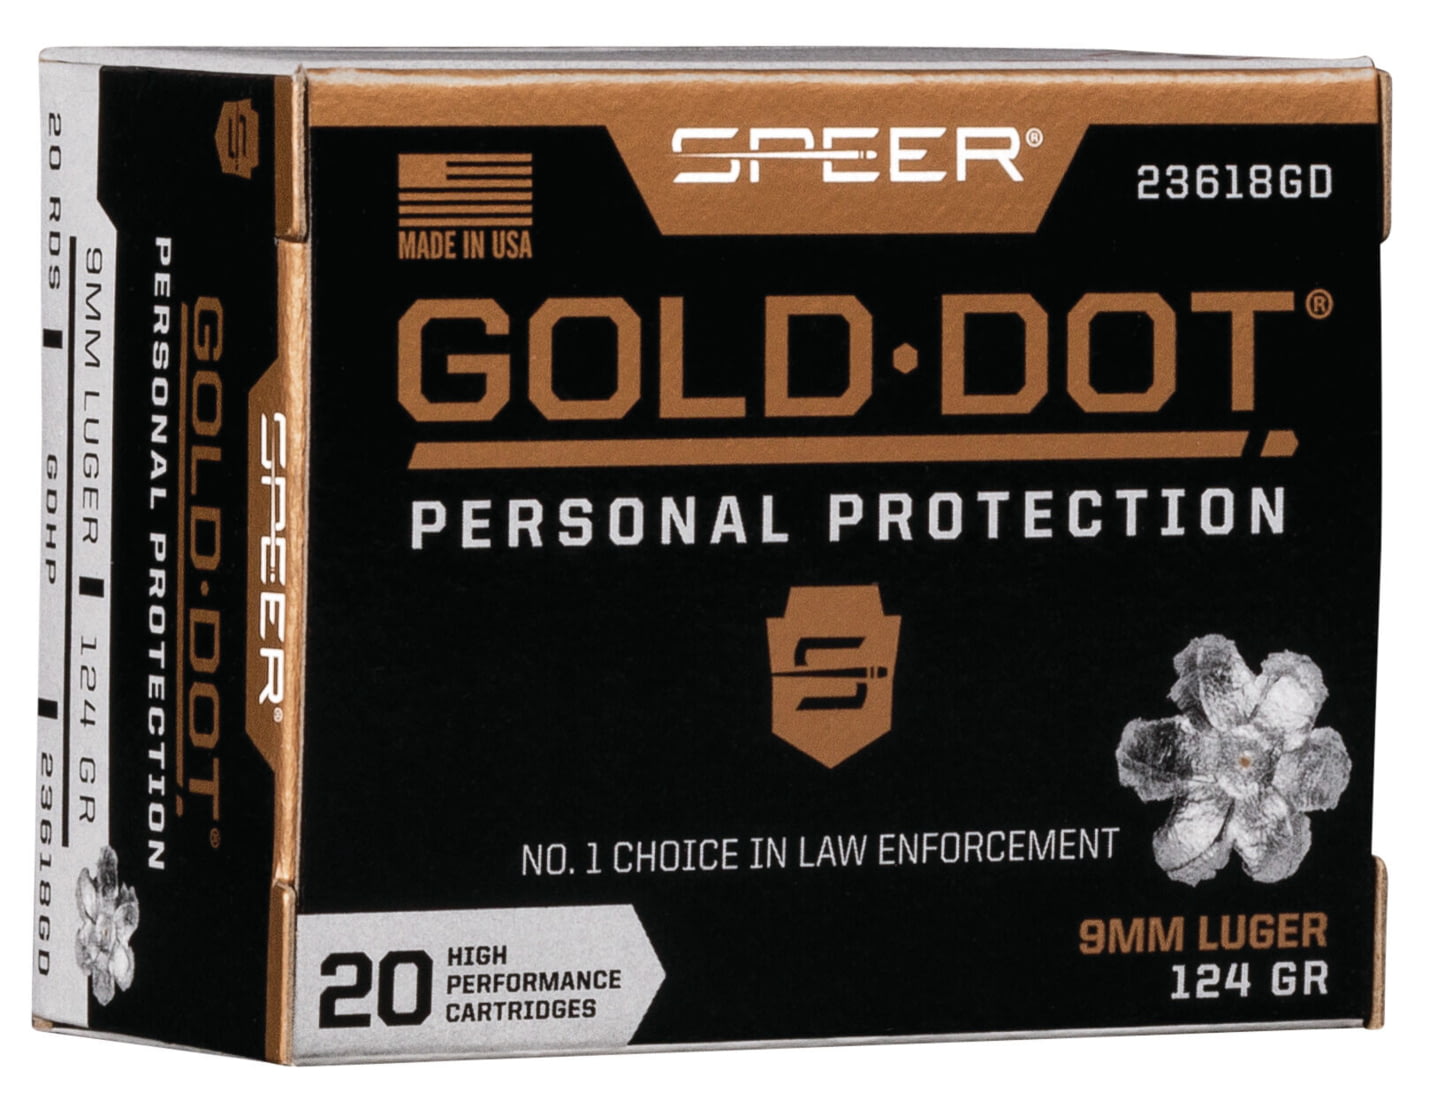 opplanet speer gold dot pistol ammo 9mm luger gold dot hollow point 124 grain 20 rounds 23618gd main 1